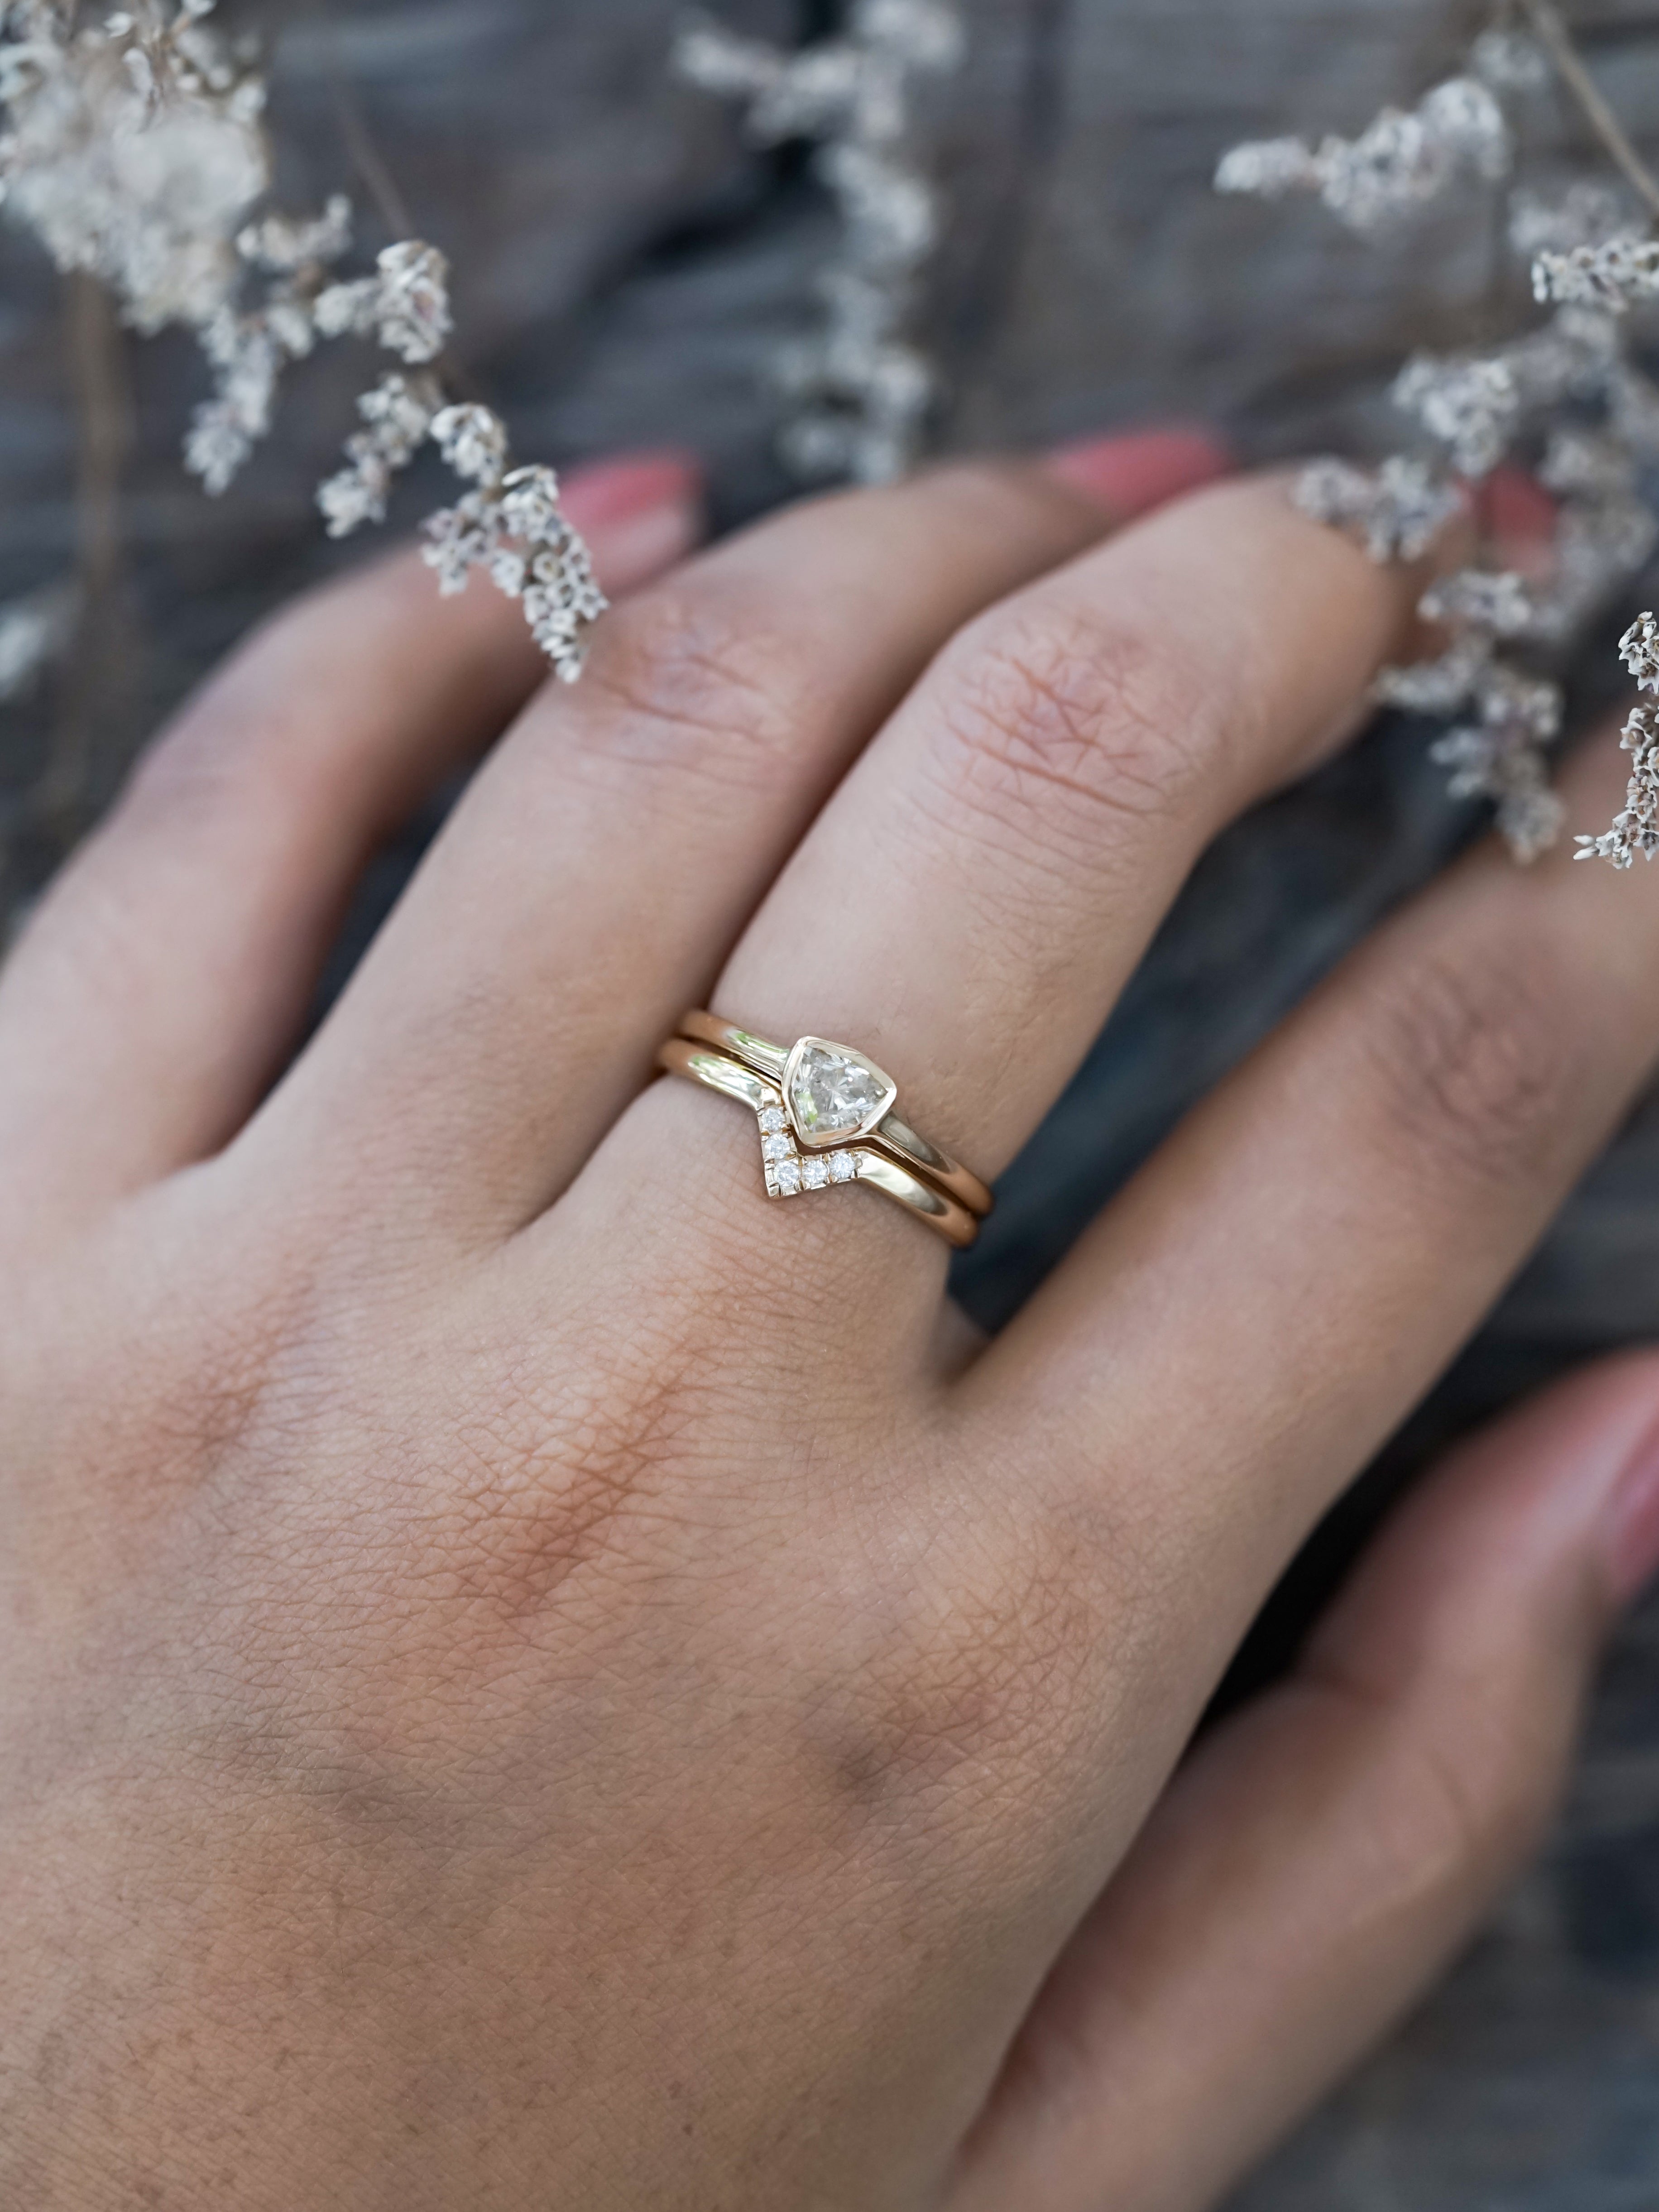 GOLDEN SUN JEWELRY: Hand picked diamonds elegantly set into this